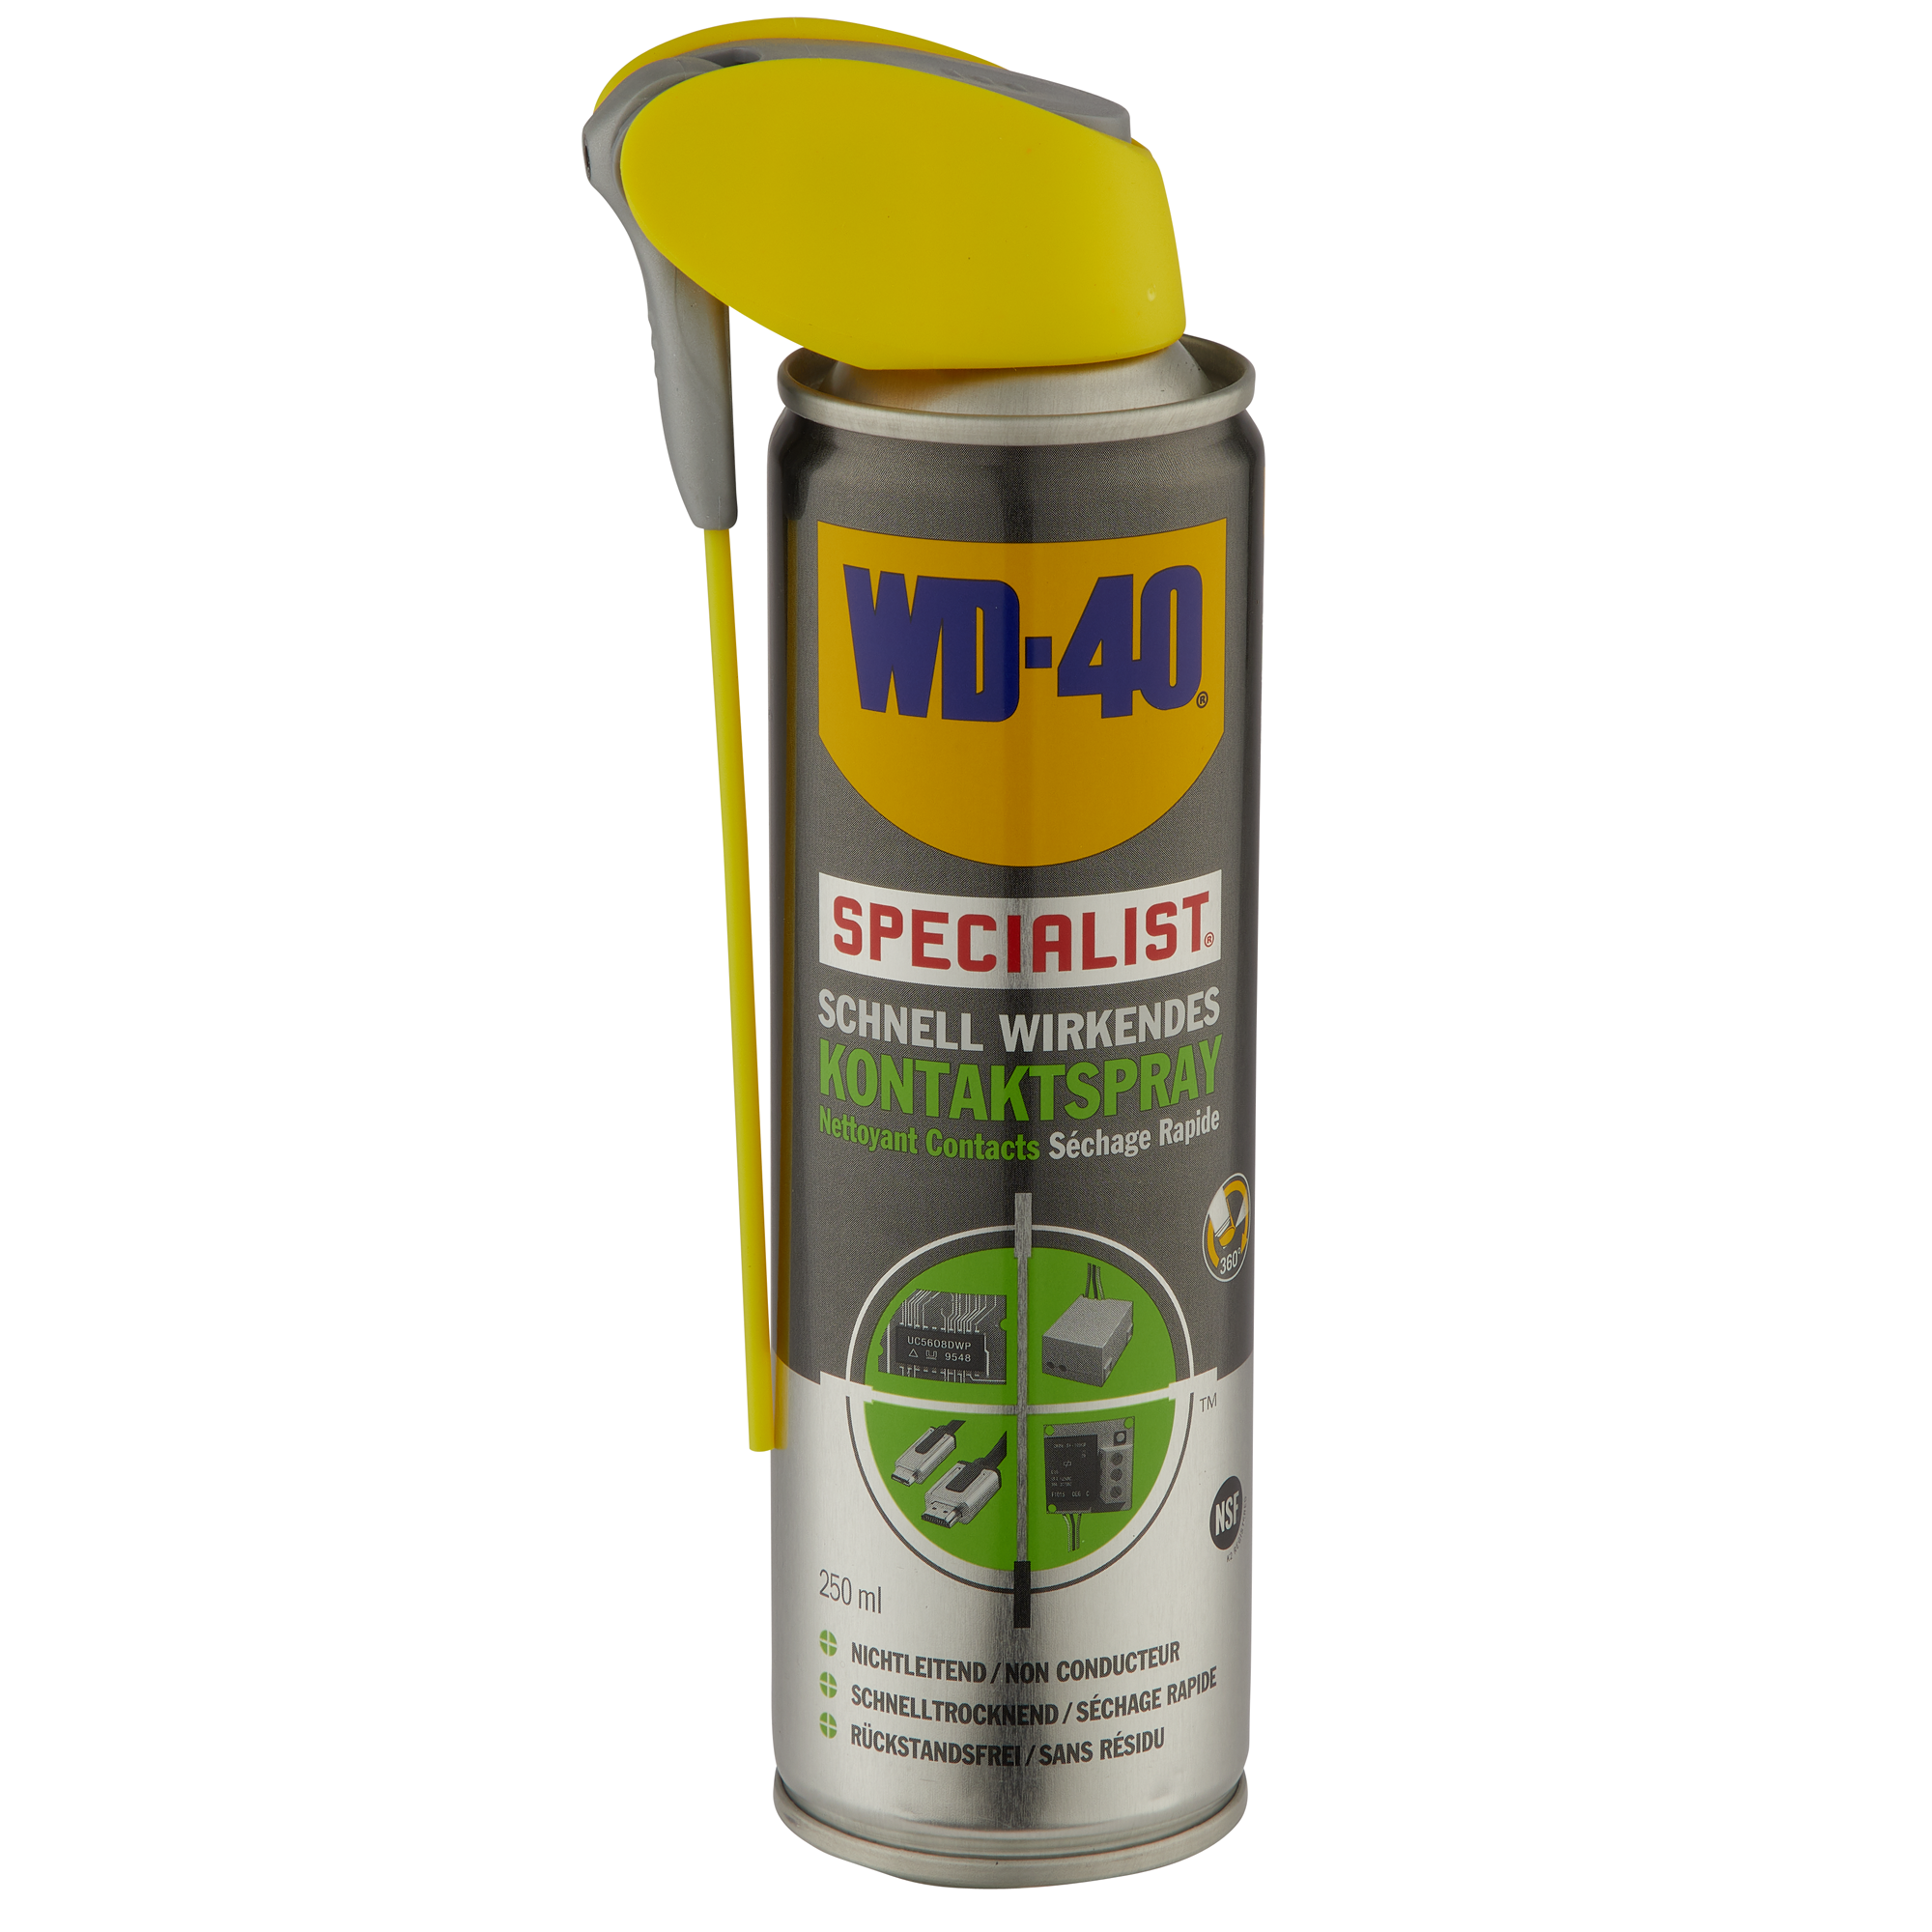 WD-40 Specialist Kontaktspray 250 ml + product picture